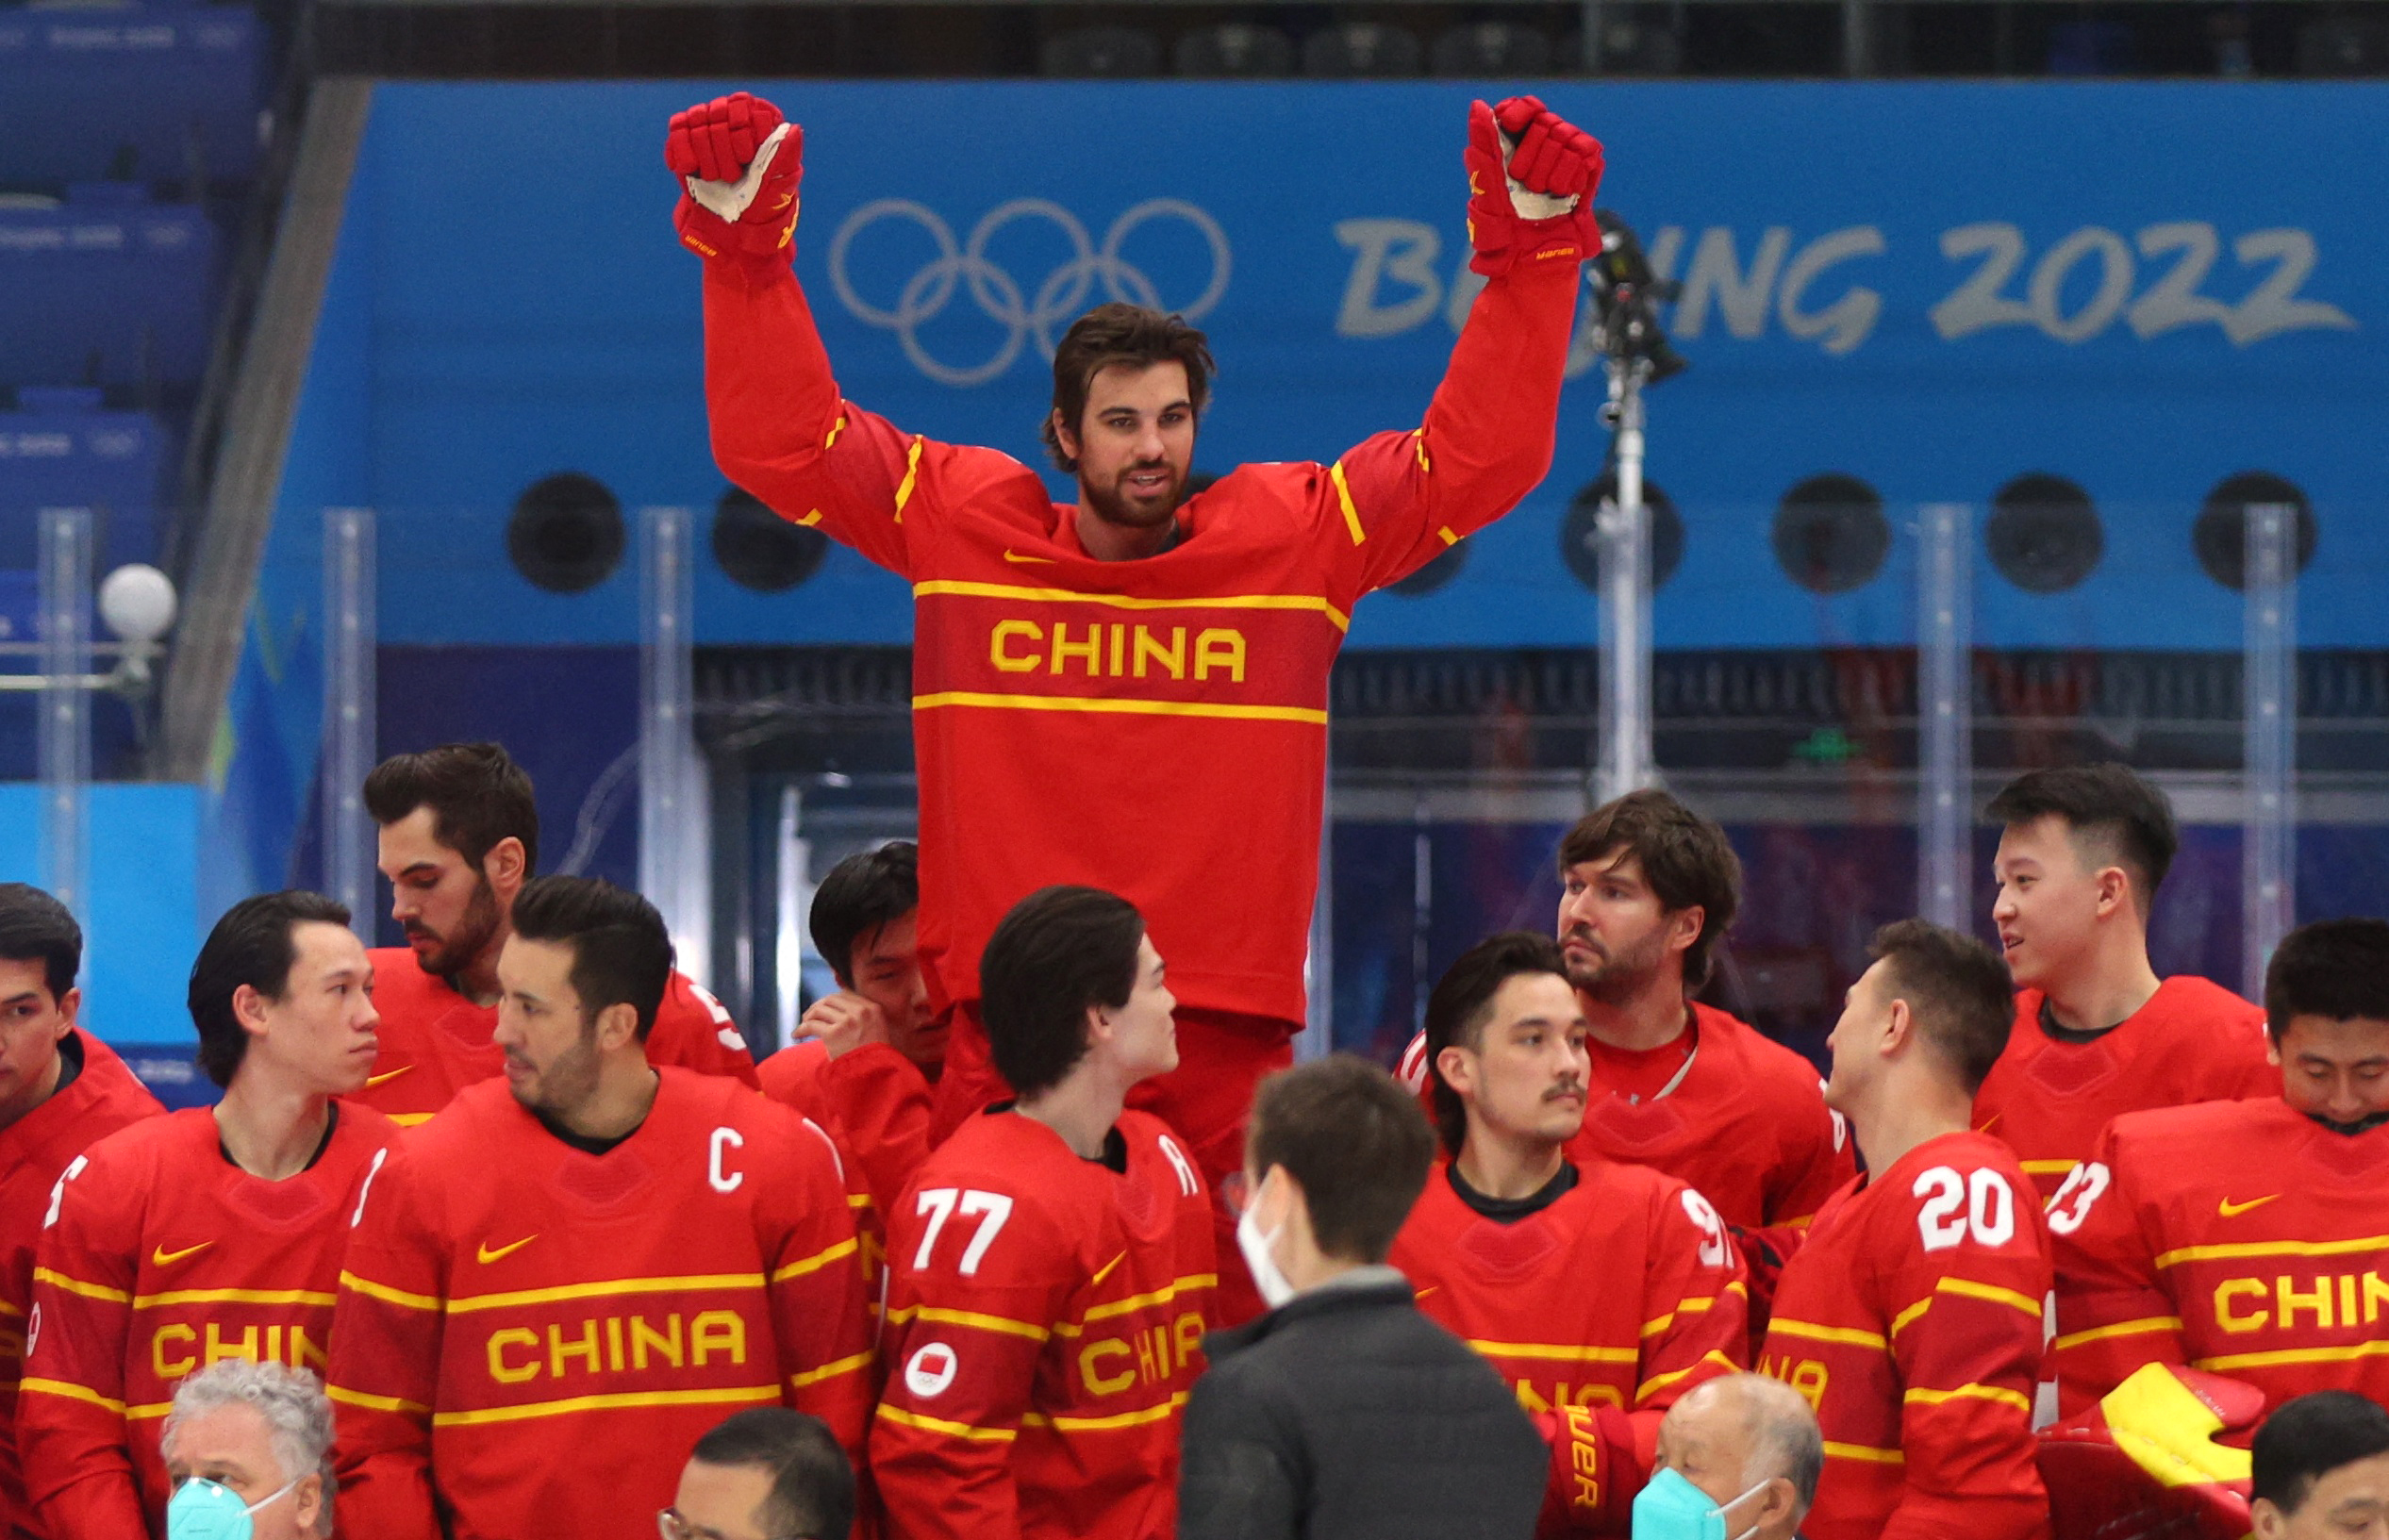 MEN'S HOCKEY: O'Neill '12, Agostino '14 to face China in Olympic